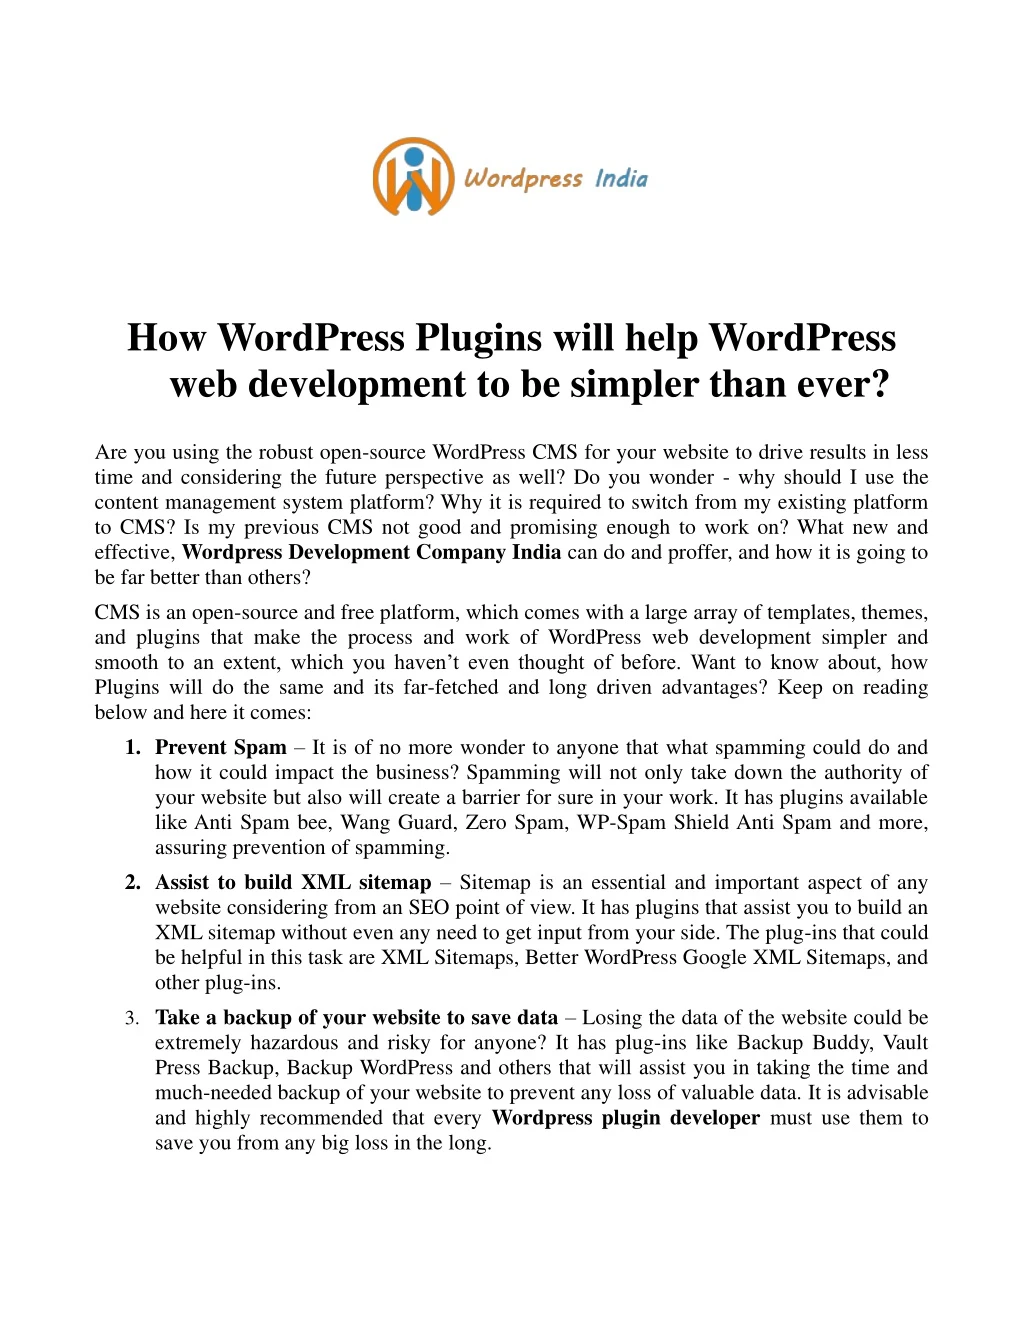 how wordpress plugins will help wordpress